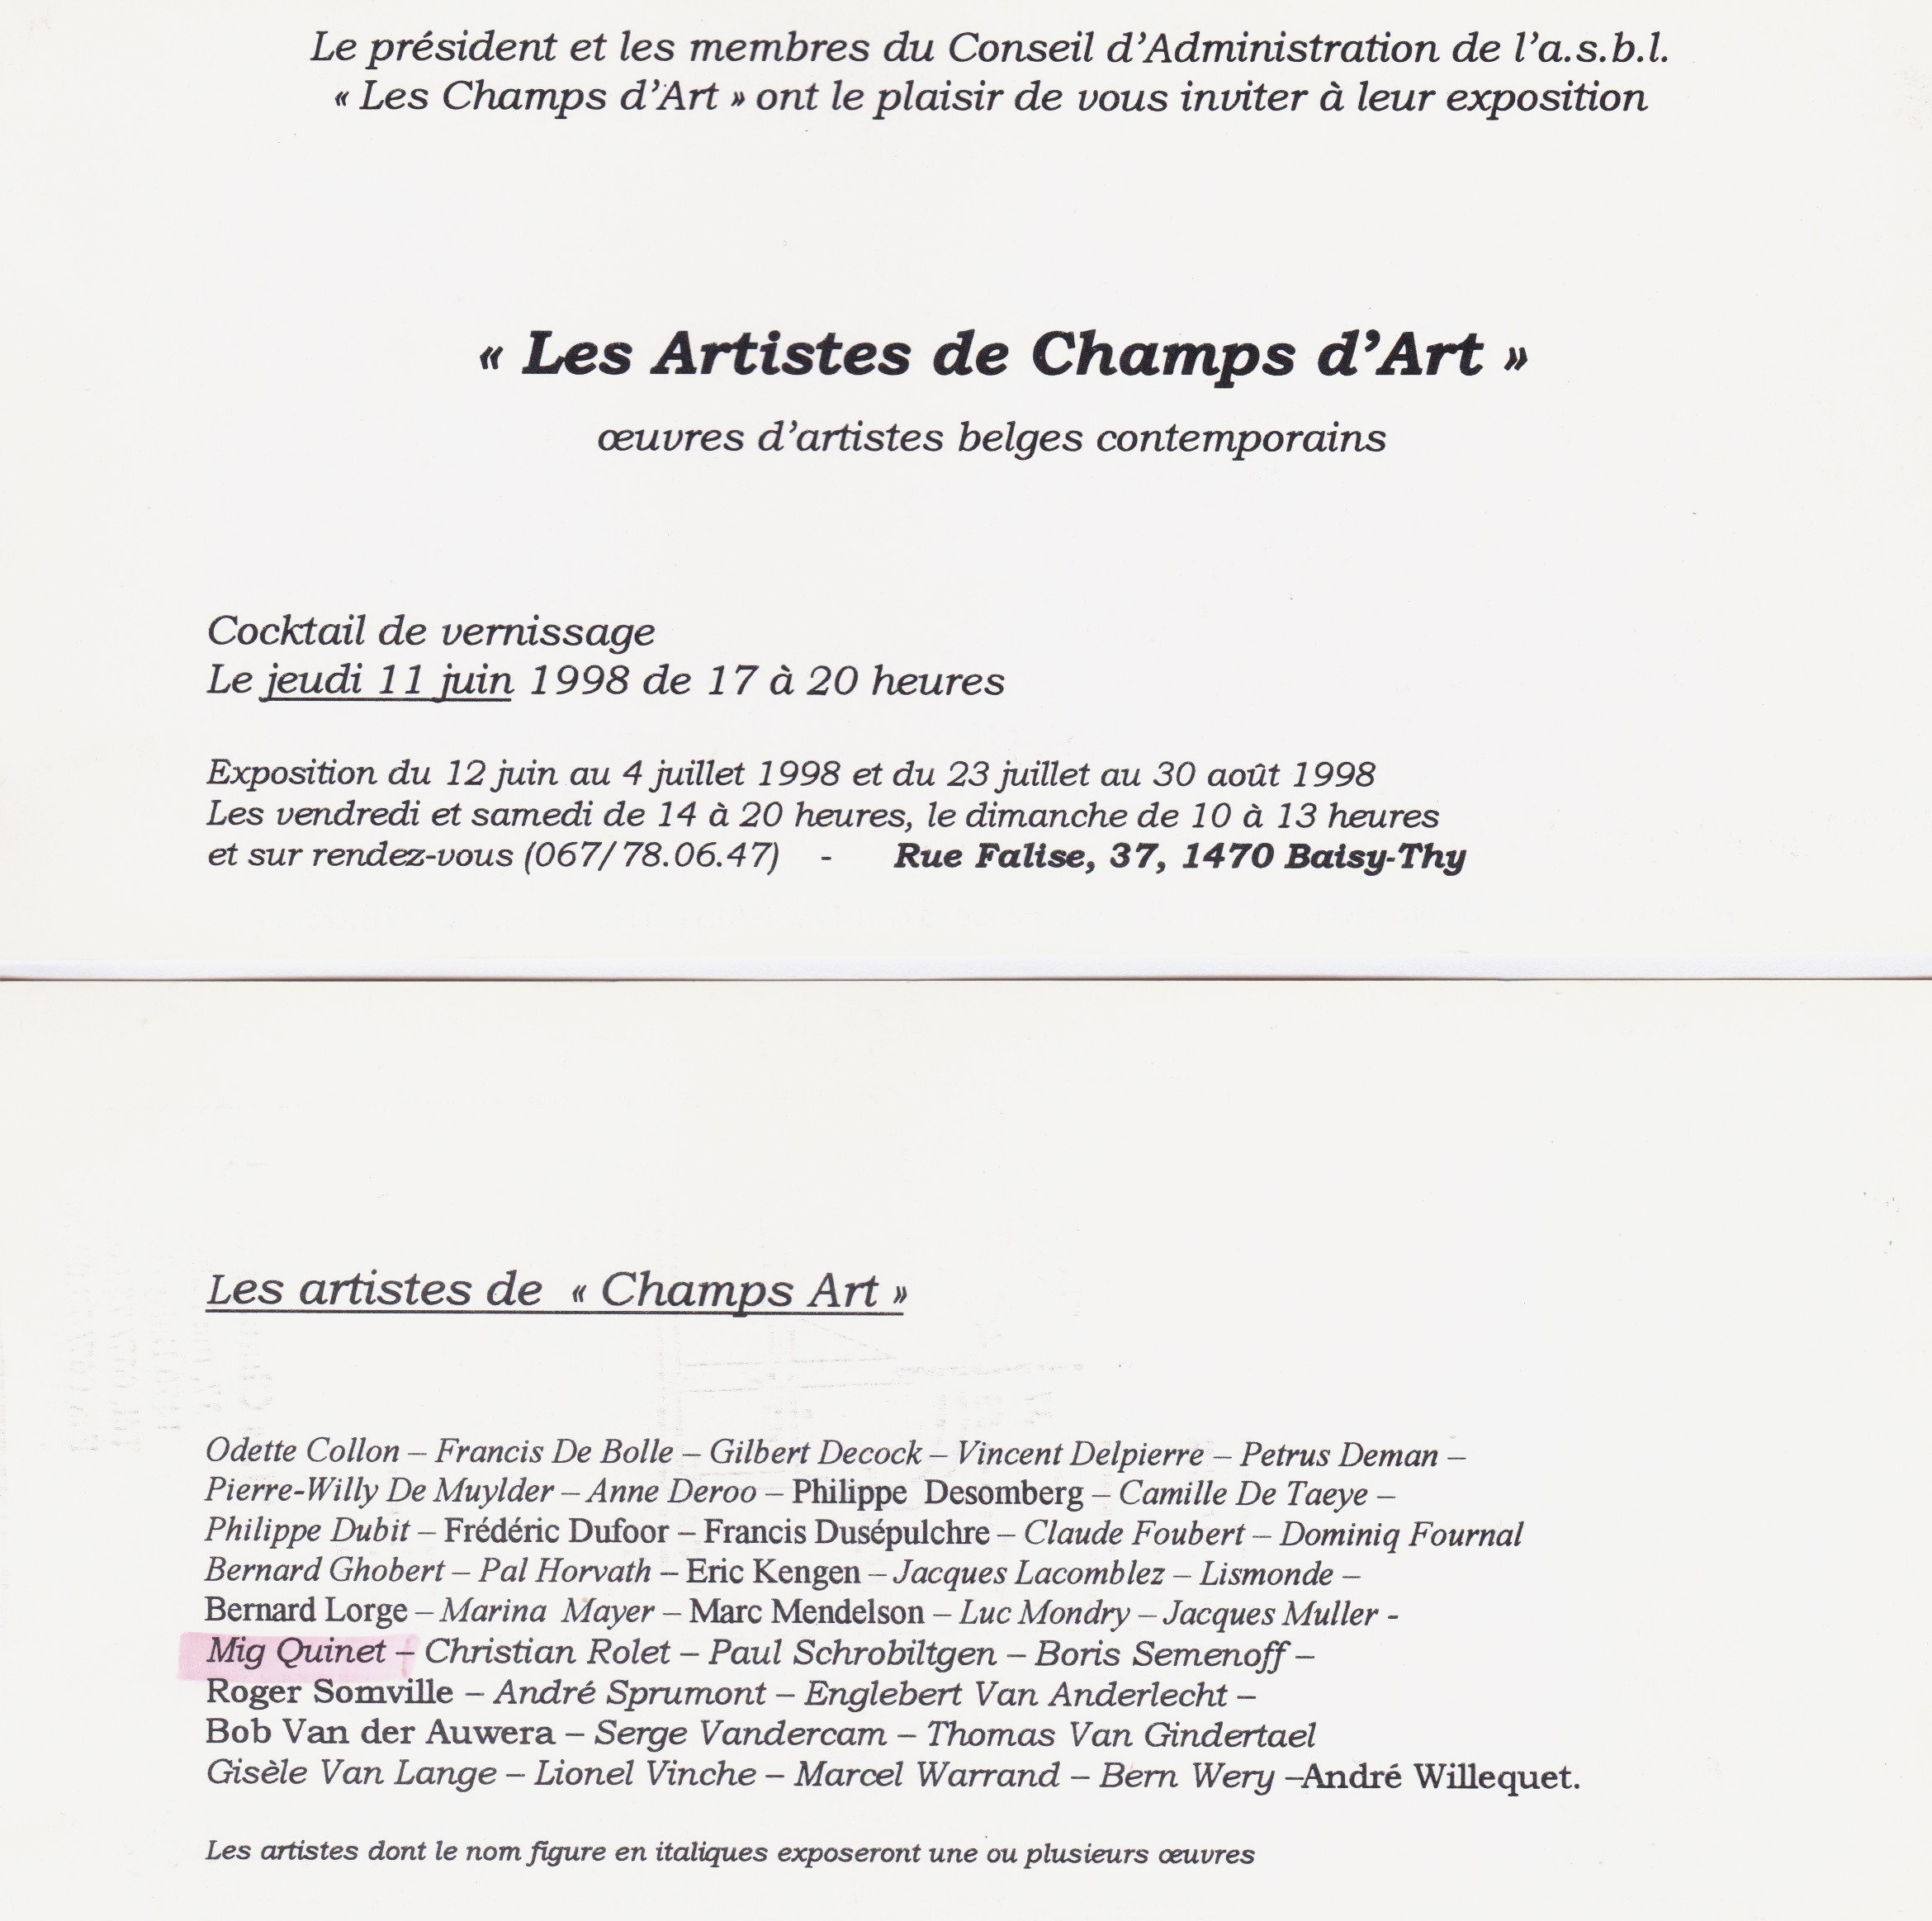 Les artistes de champs d’art, 1998